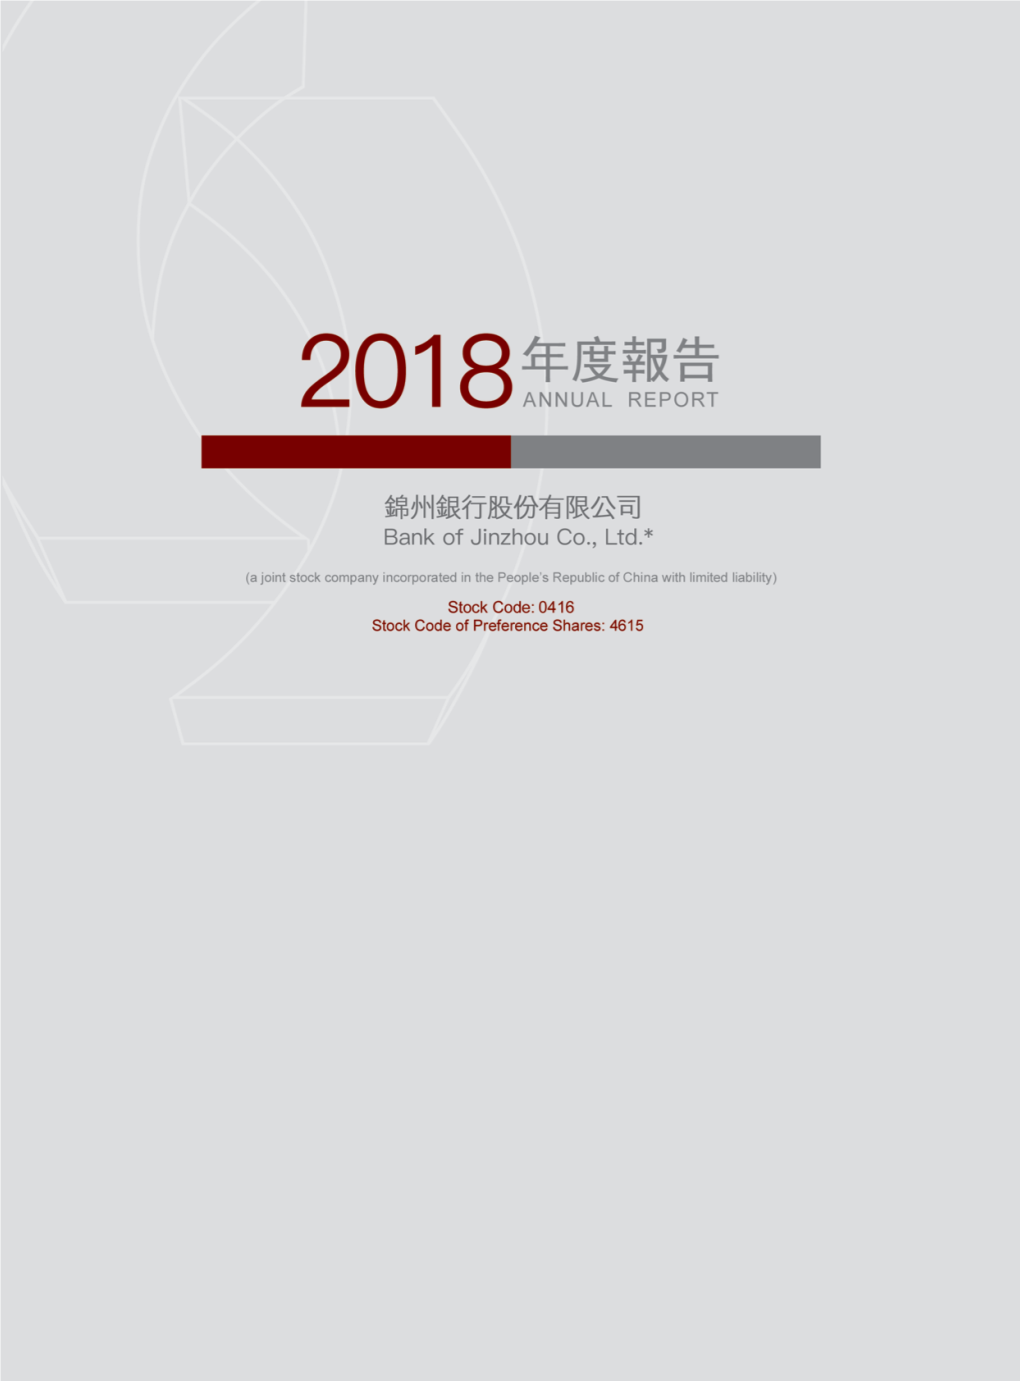 2018 Annual Report * Bank of Jinzhou Co., Ltd